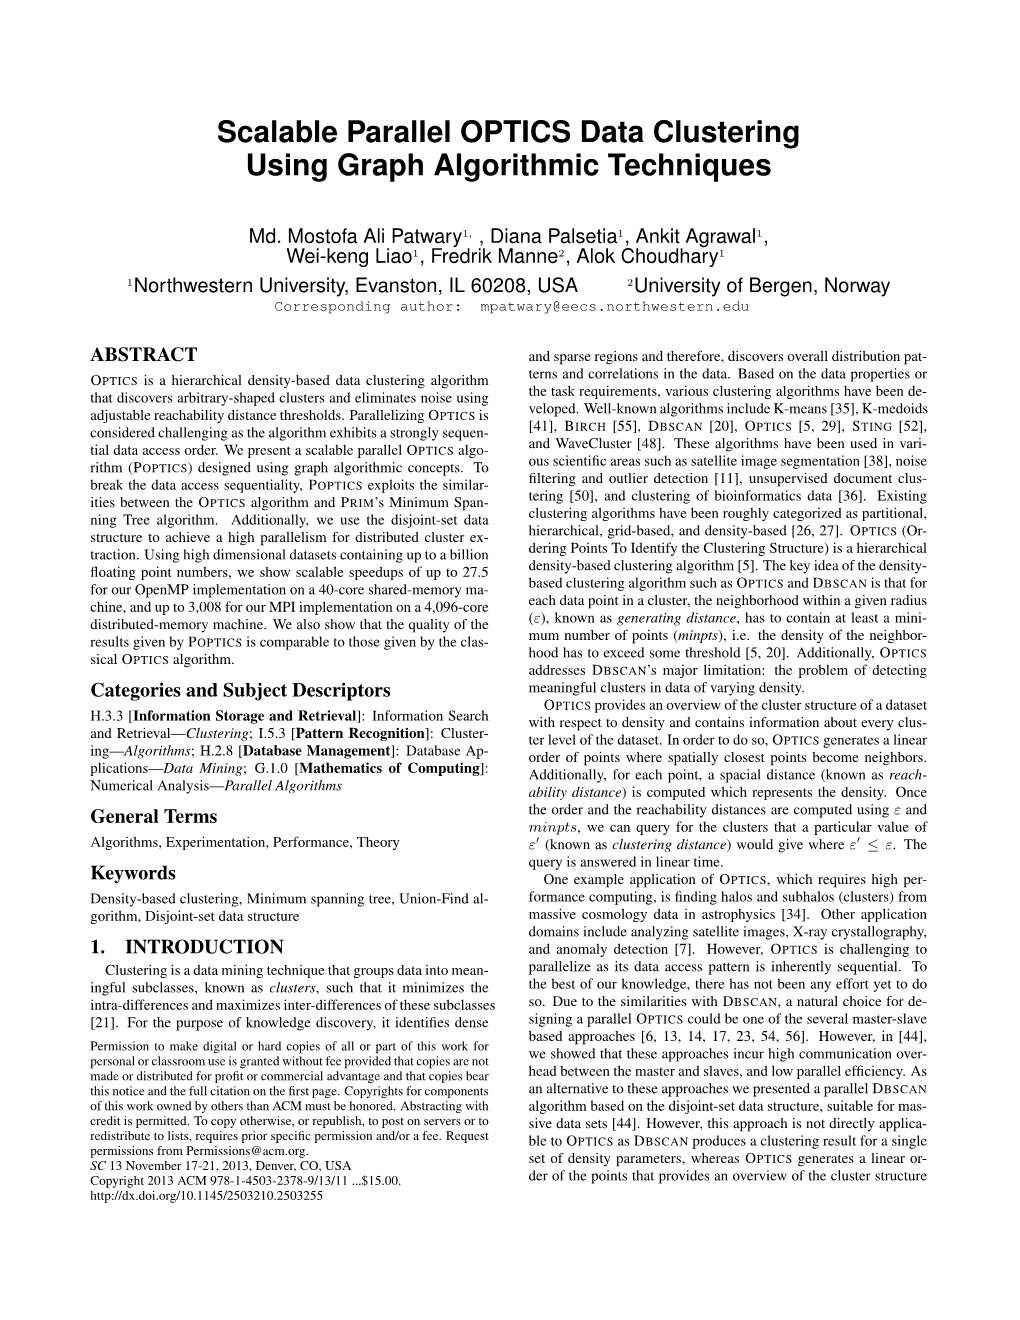 Scalable Parallel OPTICS Data Clustering Using Graph Algorithmic Techniques